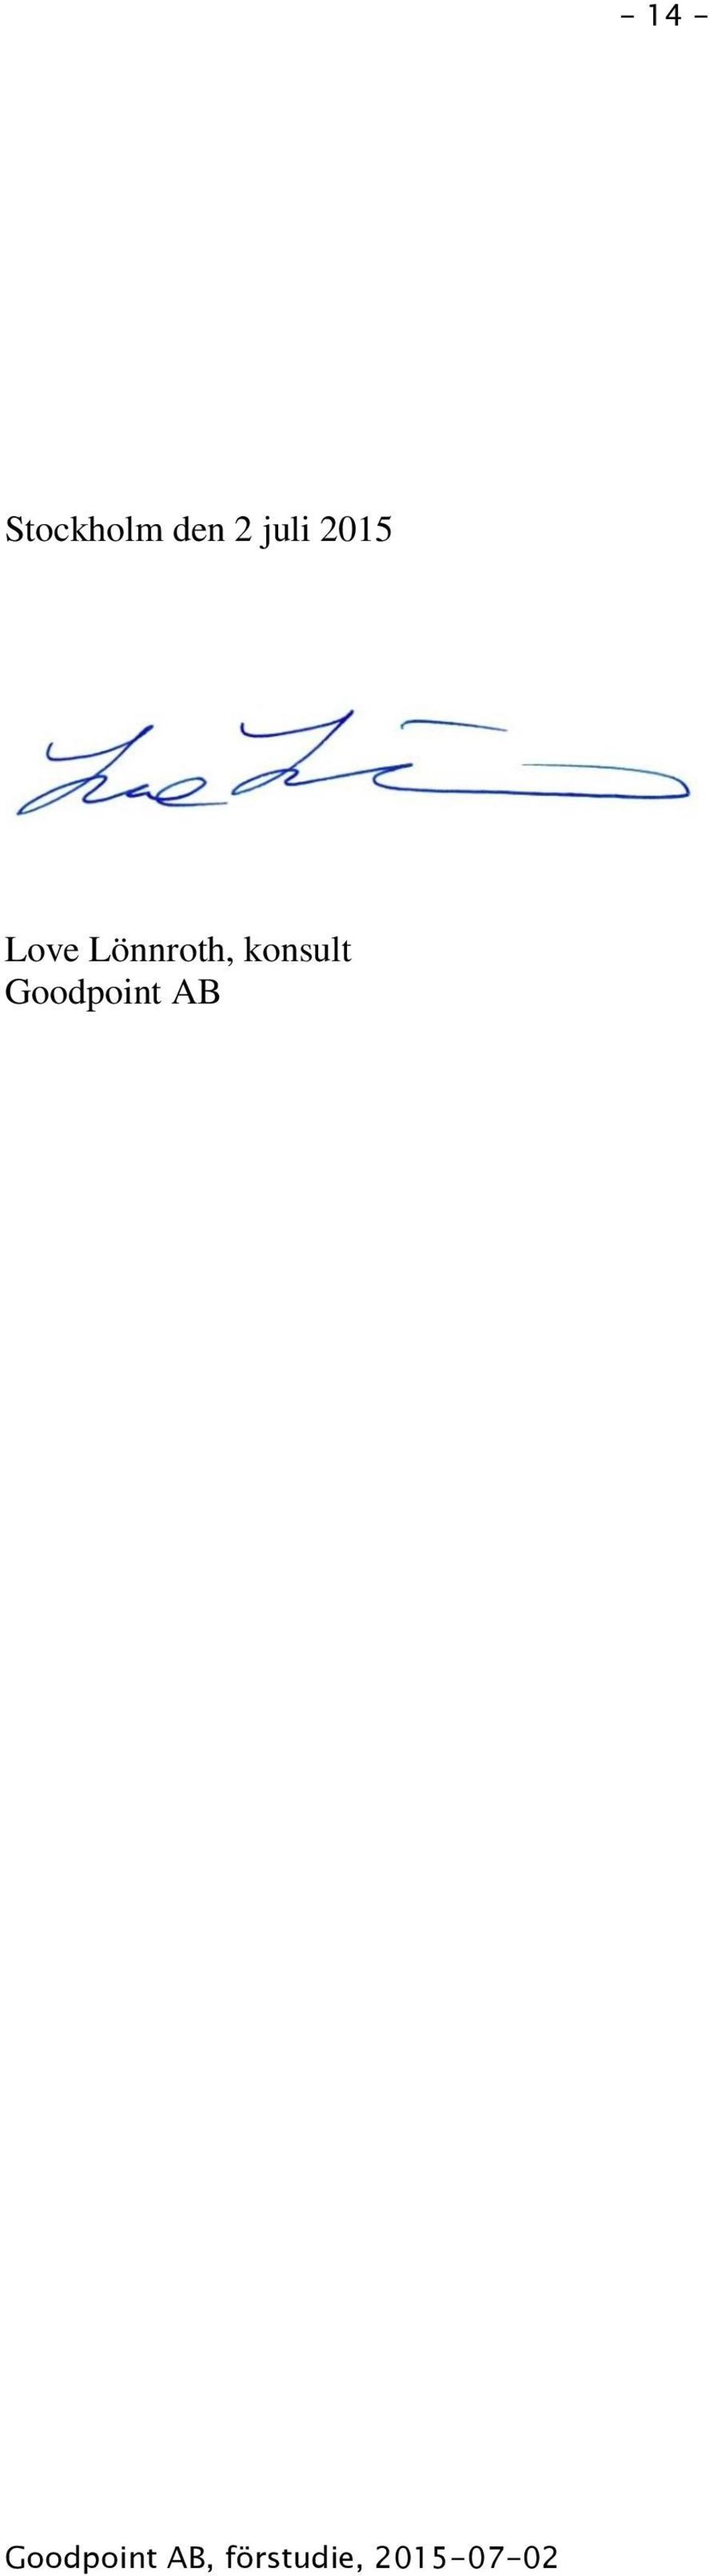 Love Lönnroth,